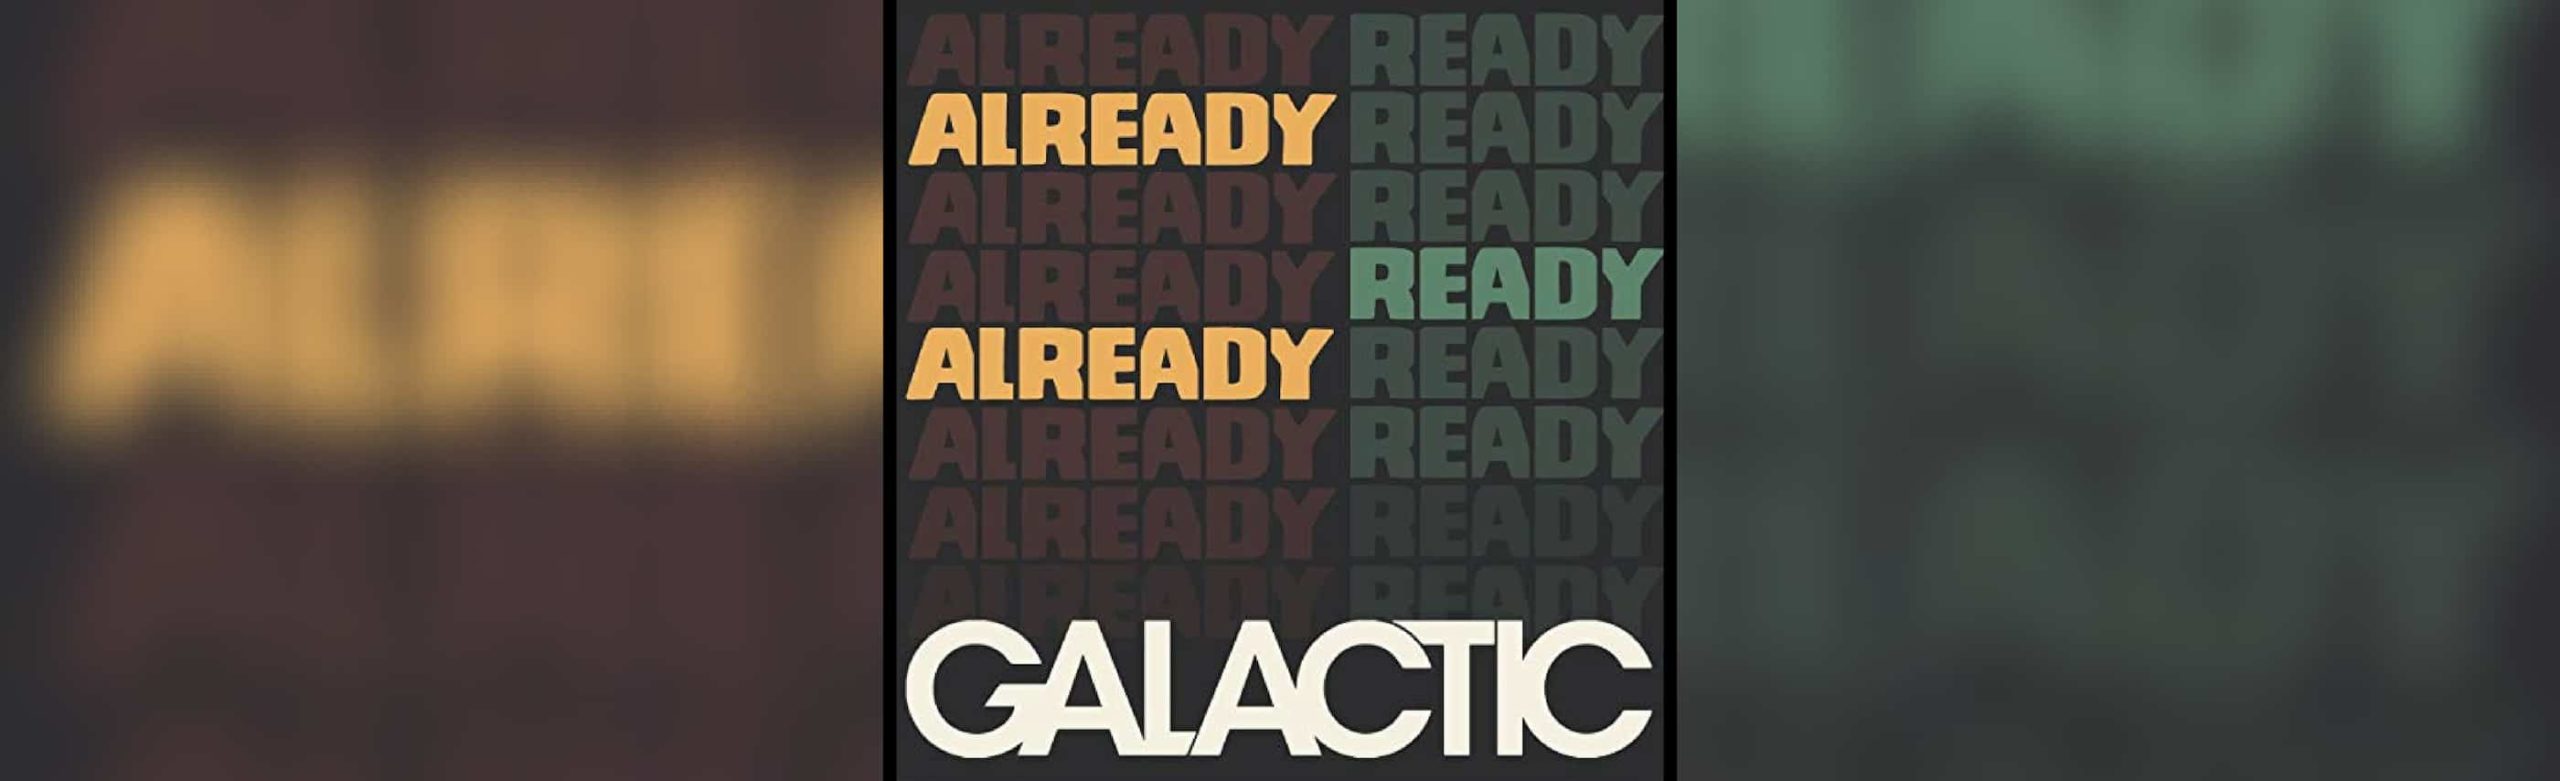 Galactic’s New Album is Already Ready Already Image